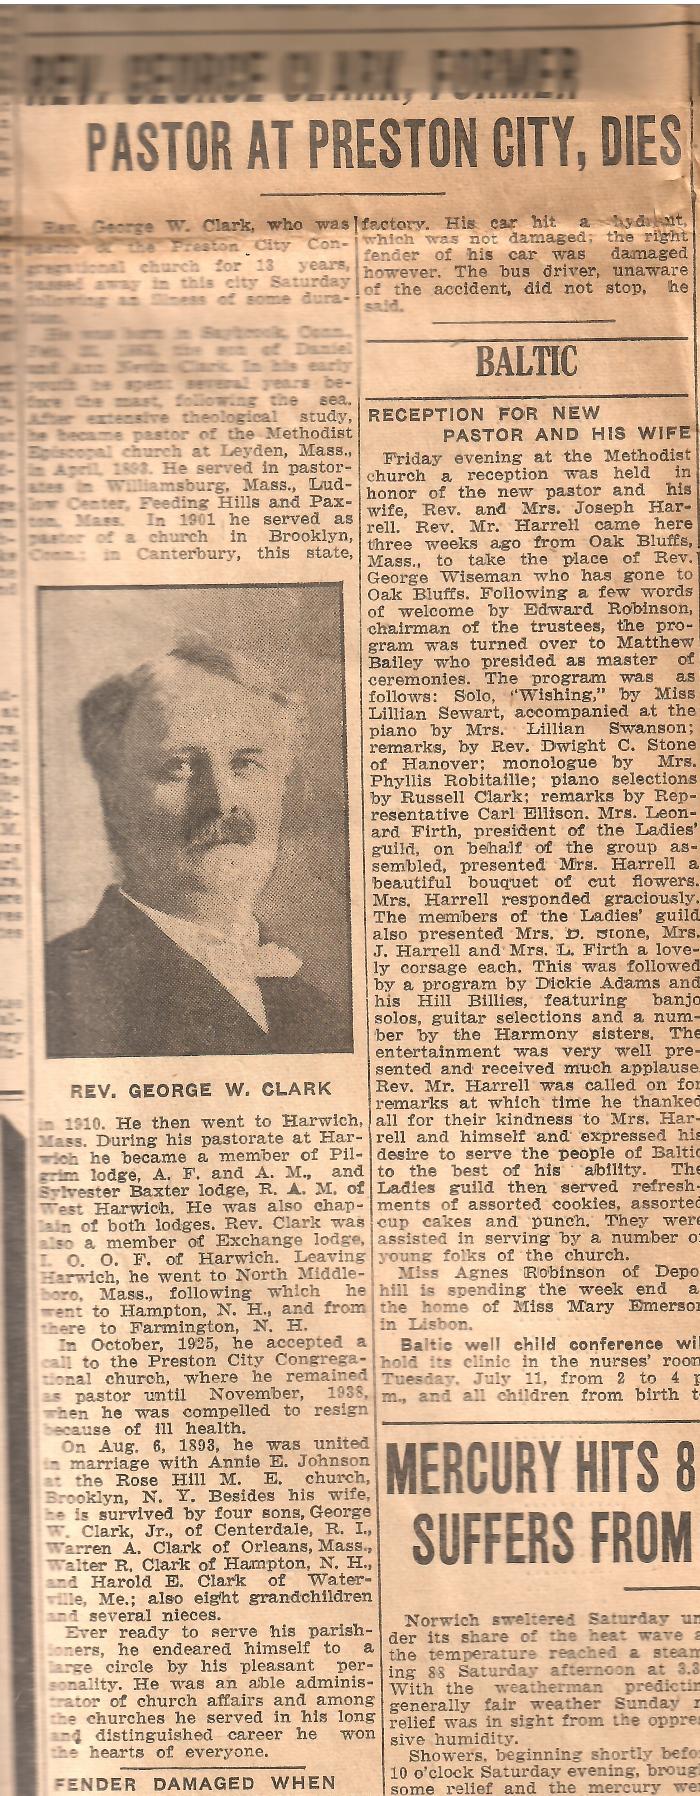 Rev. George Clark, Former Pastor at Preston City, Dies